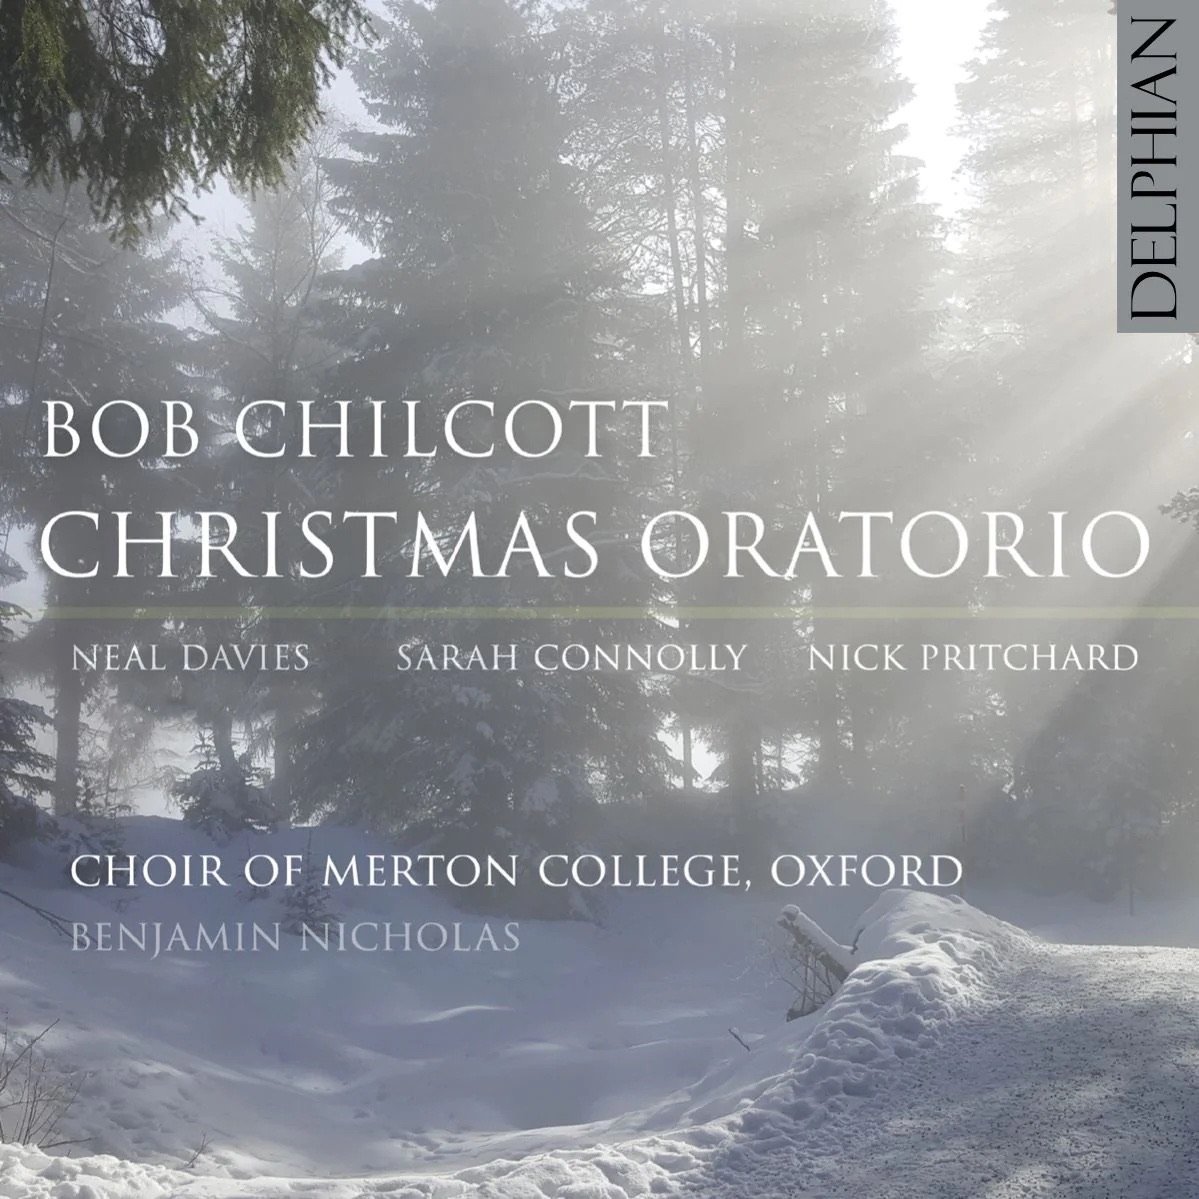 bob-chilcott-christmas-oratorio-cd-delphian-records-459794.jpeg